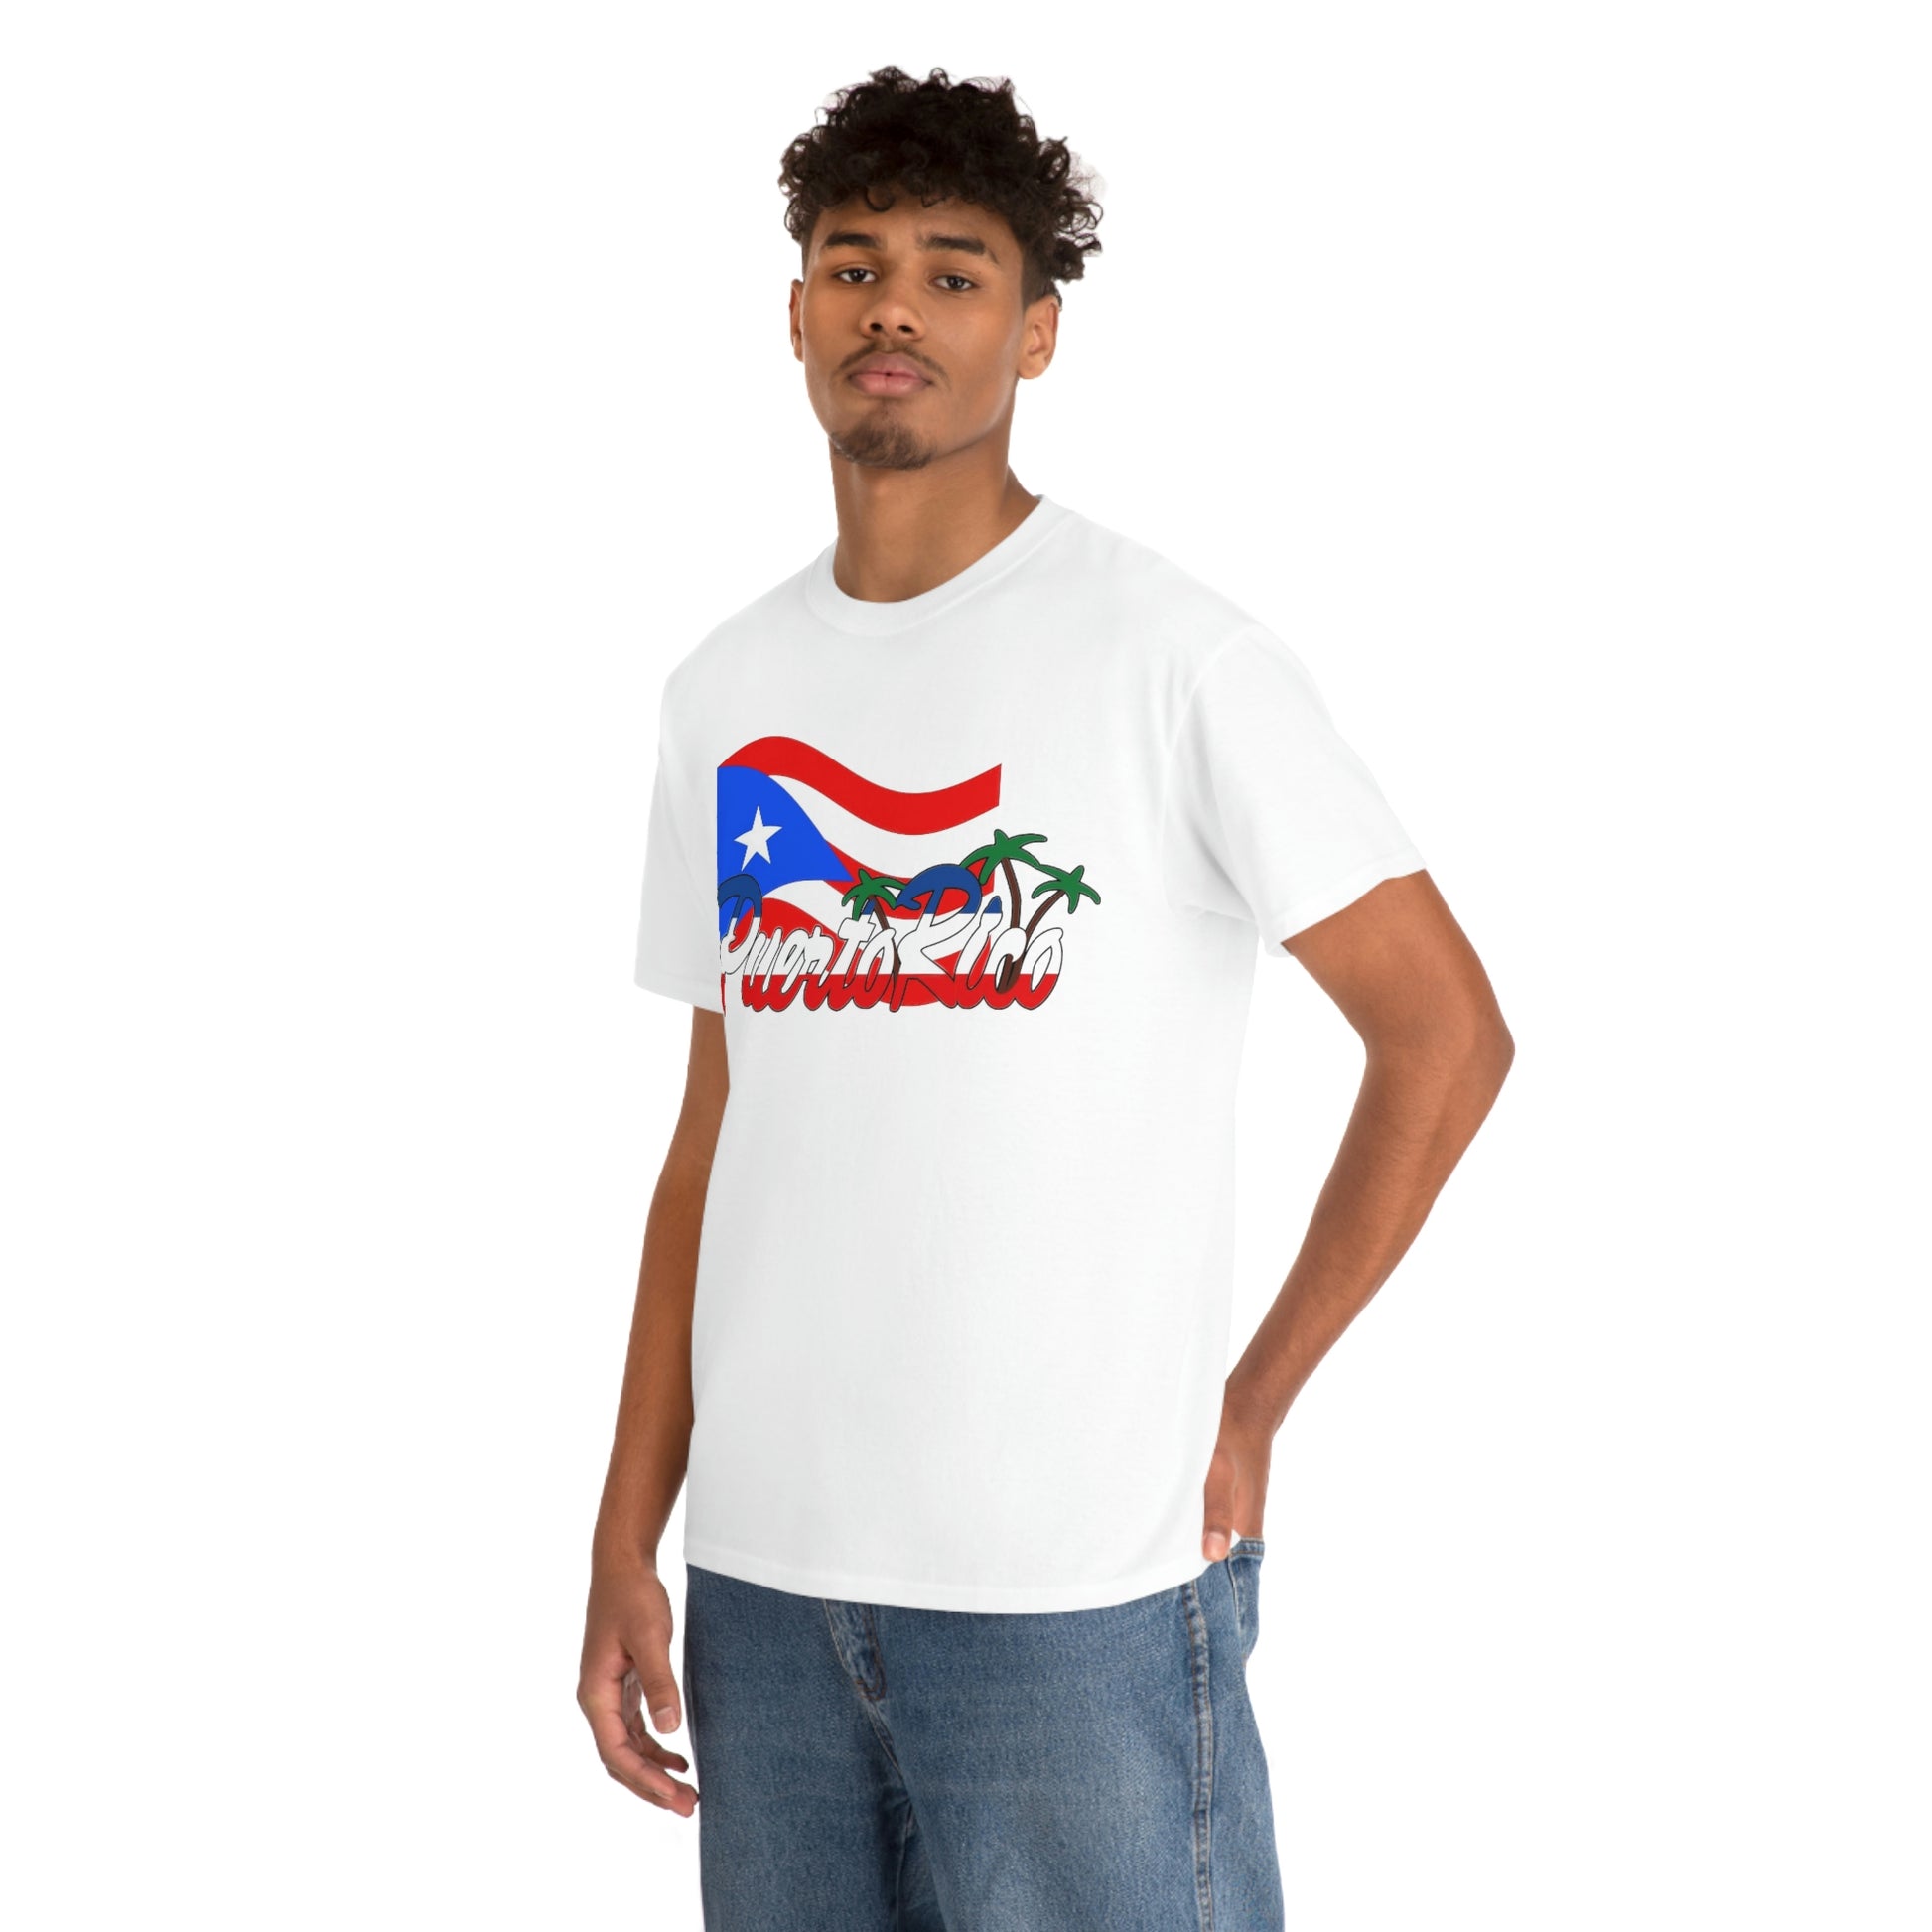 Guy Wearing Puerto Rico Cotton Tee Shirt